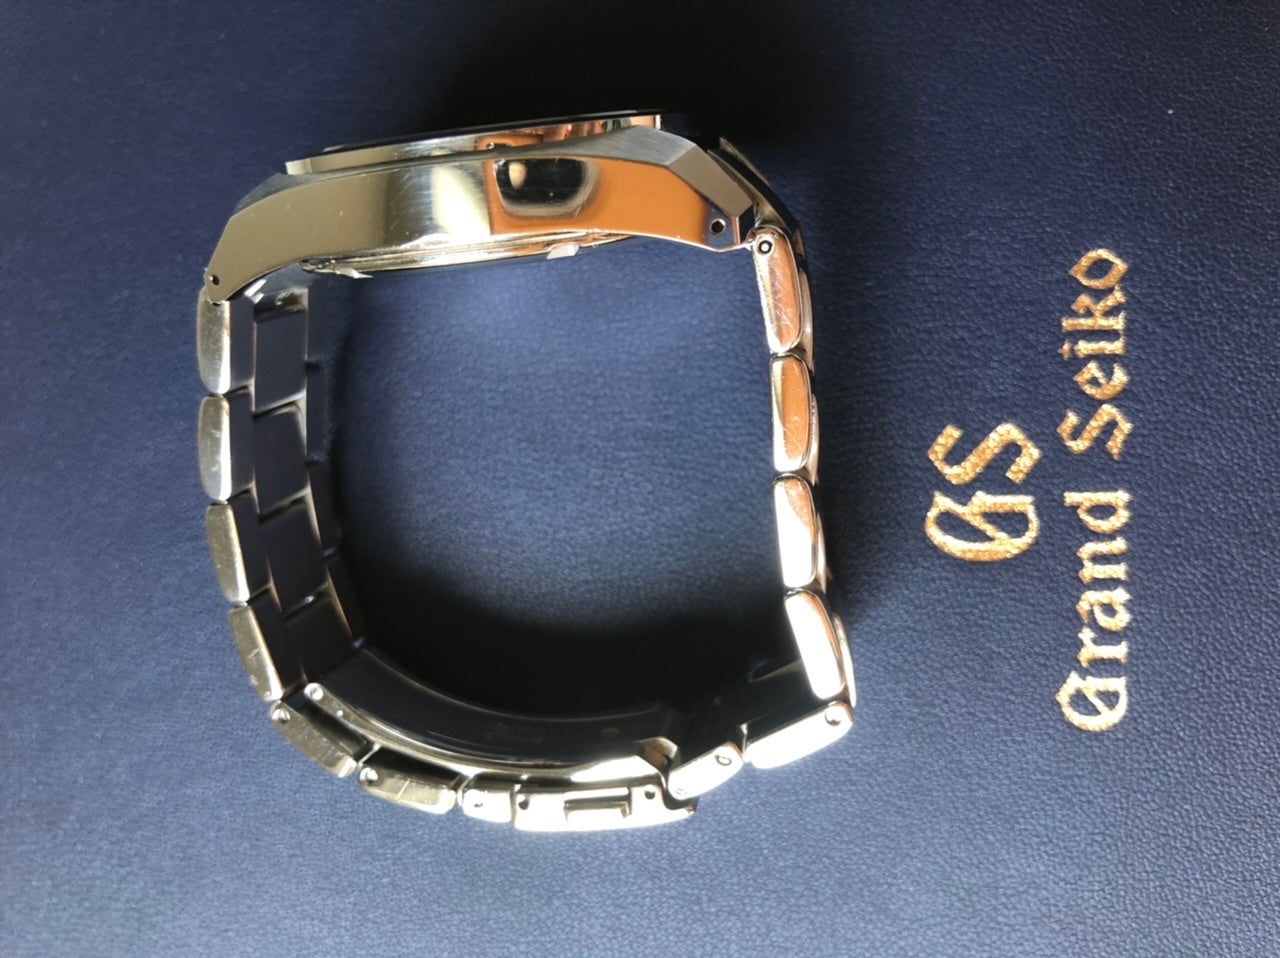 Sold: Grand Seiko SBGX093 | WatchUSeek Watch Forums